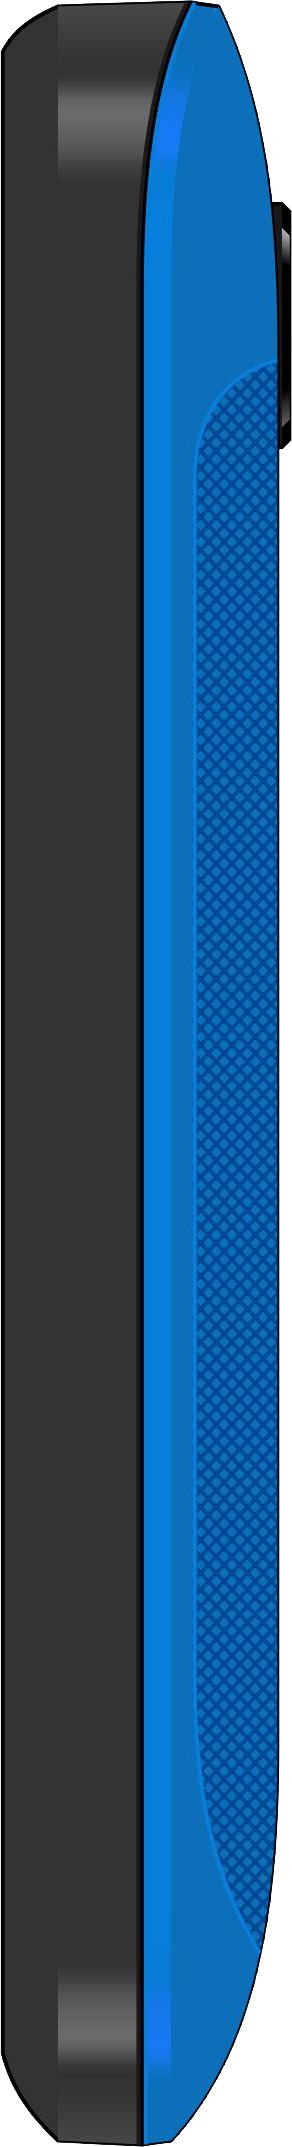 Maxcom Classic Móvil MM135 1.77" Dual SIM 2G Negro/Azul